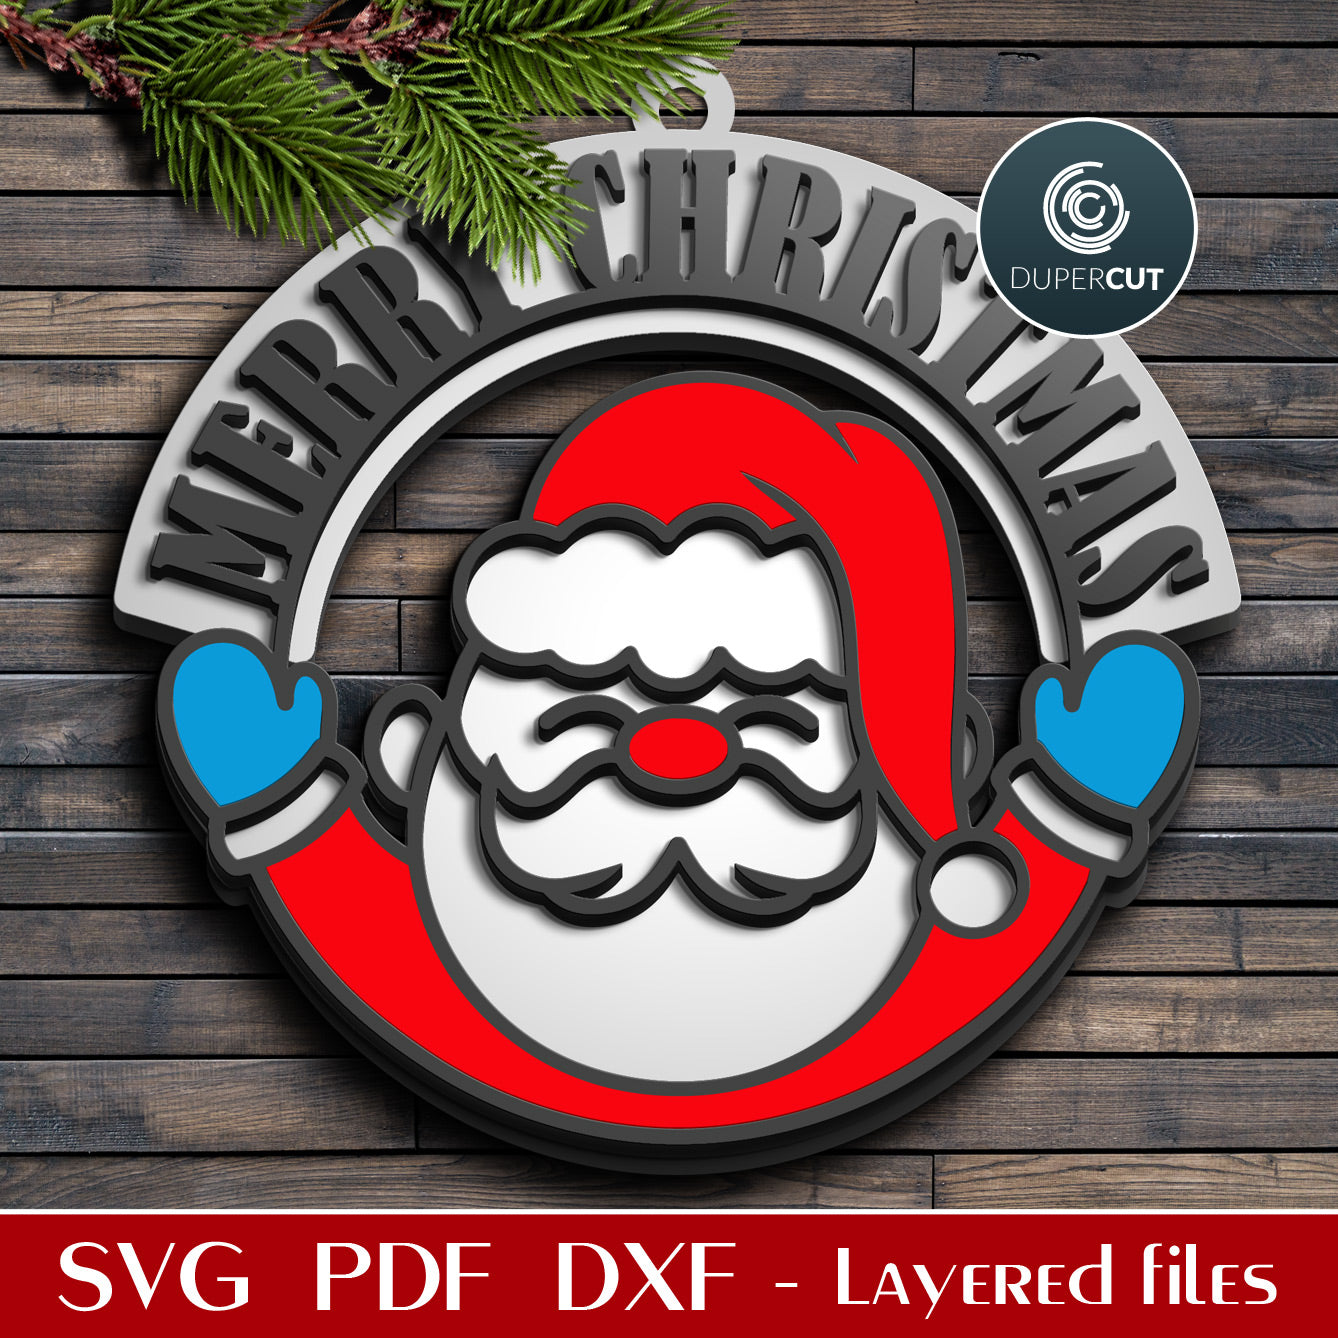 Christmas door diy hangers bundle santa - on sale 60% savings - SVG DXF layered laser cutting files for Glowforge, Cricut, Silhouette, scroll saw, CNC plasma machines by DuperCut 